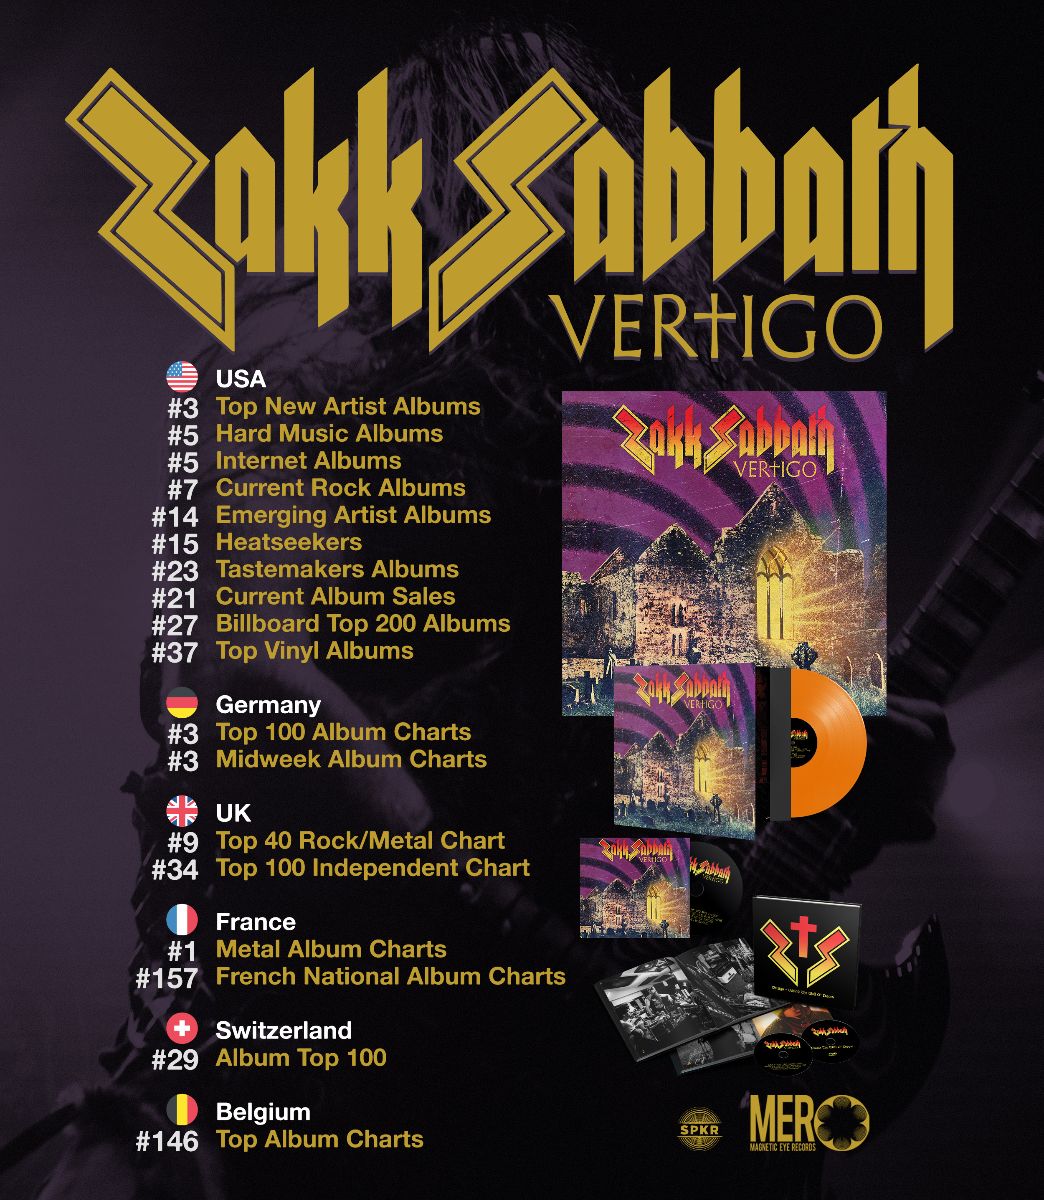 ZAKK SABBATH "Vertigo" Black Sabbath tribute album enters charts